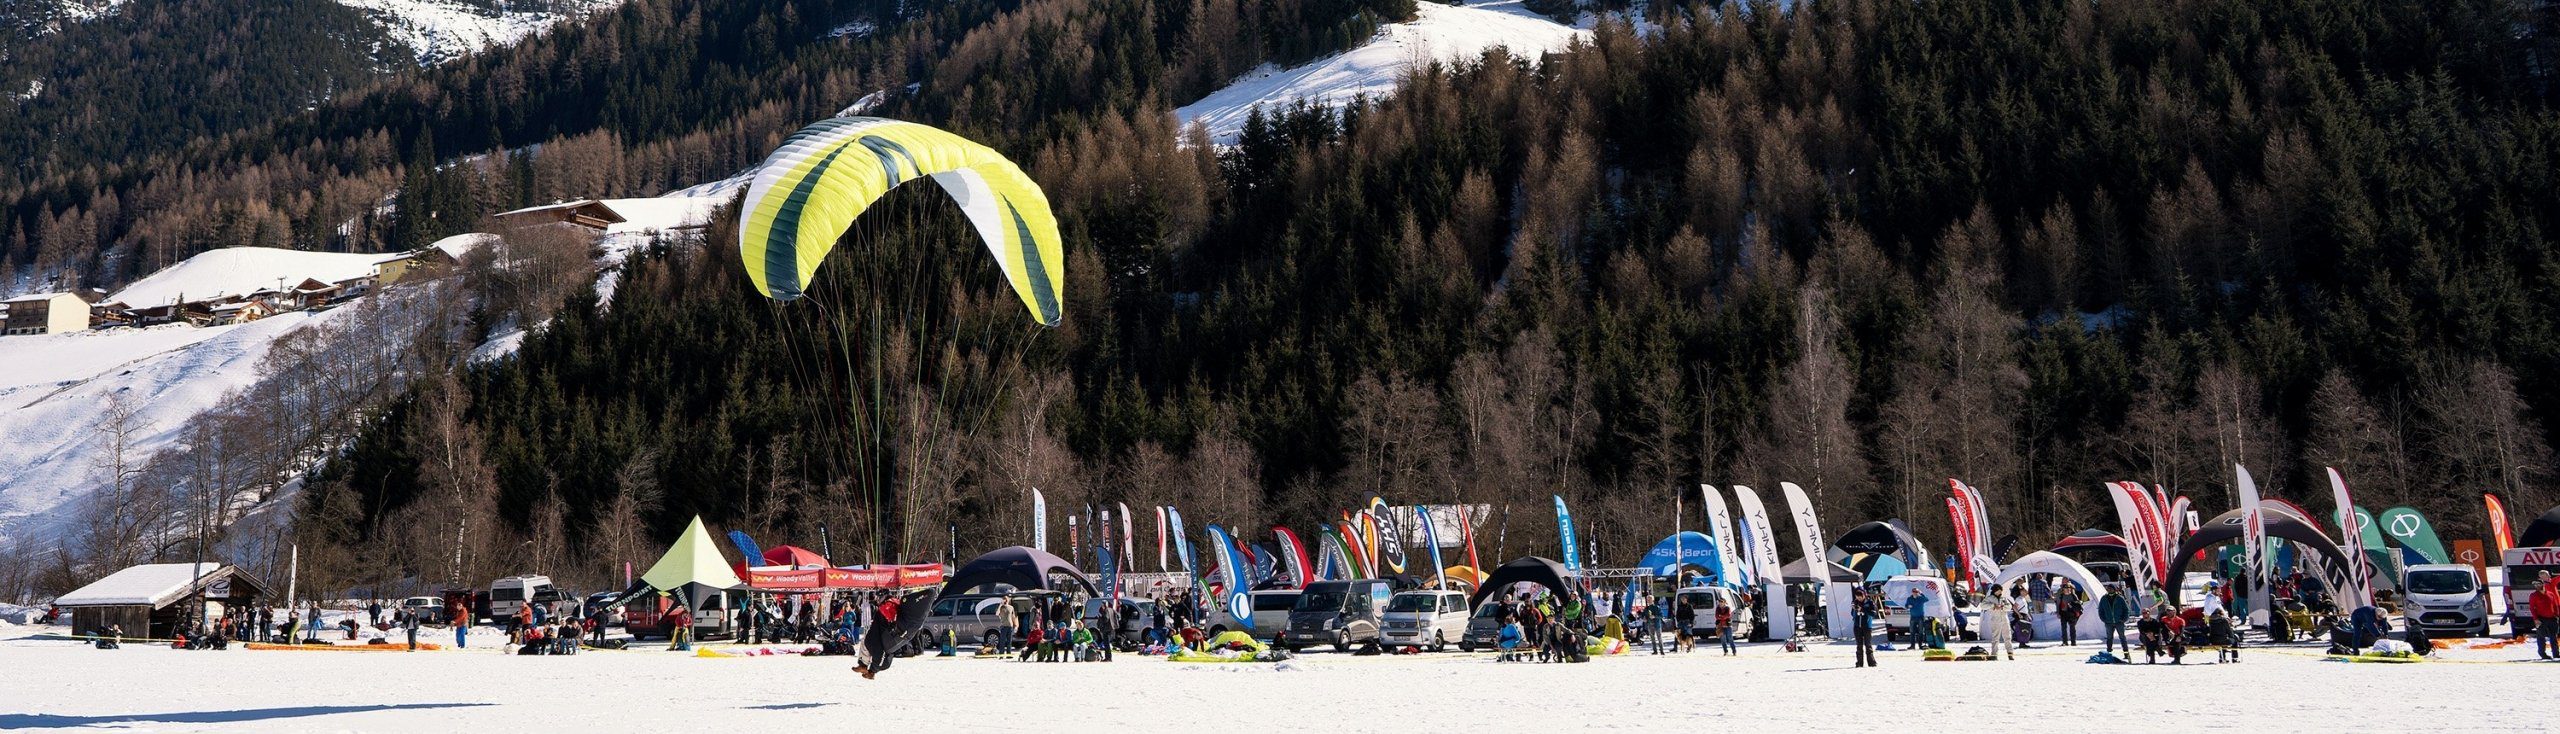 Air-Davos Paragliding Blog / News